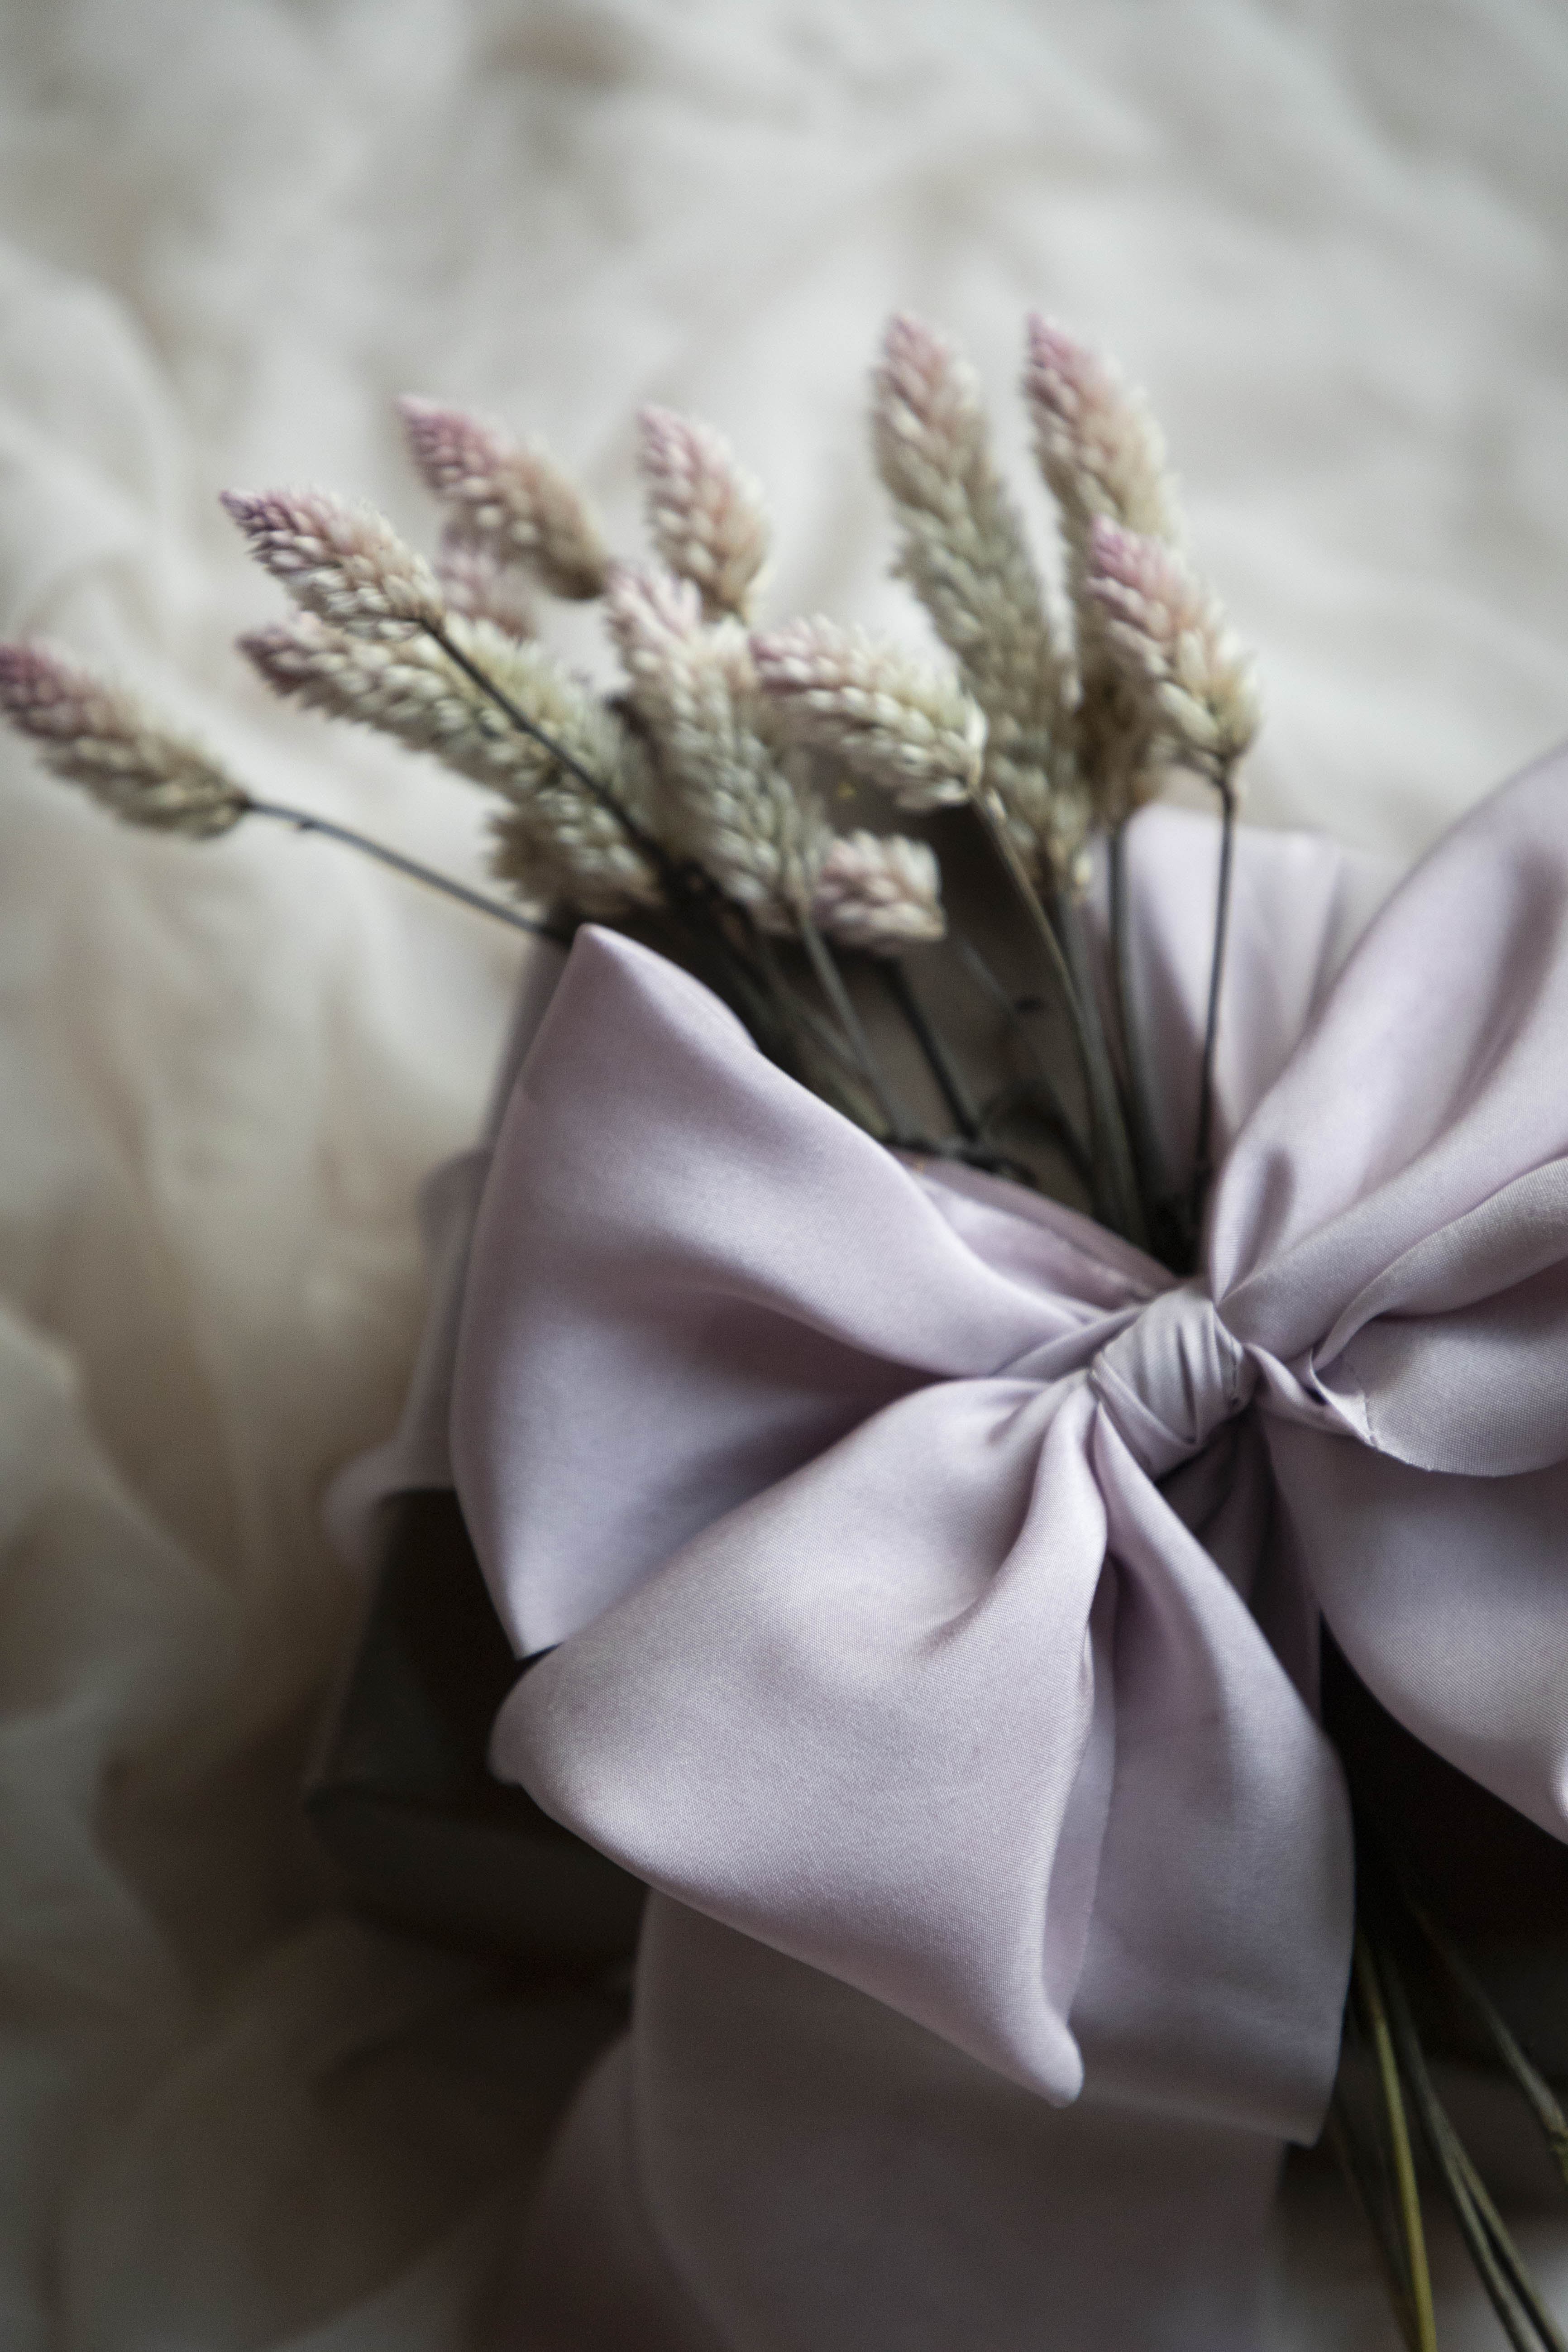 soft purple silk ribbon for wedding bouquets